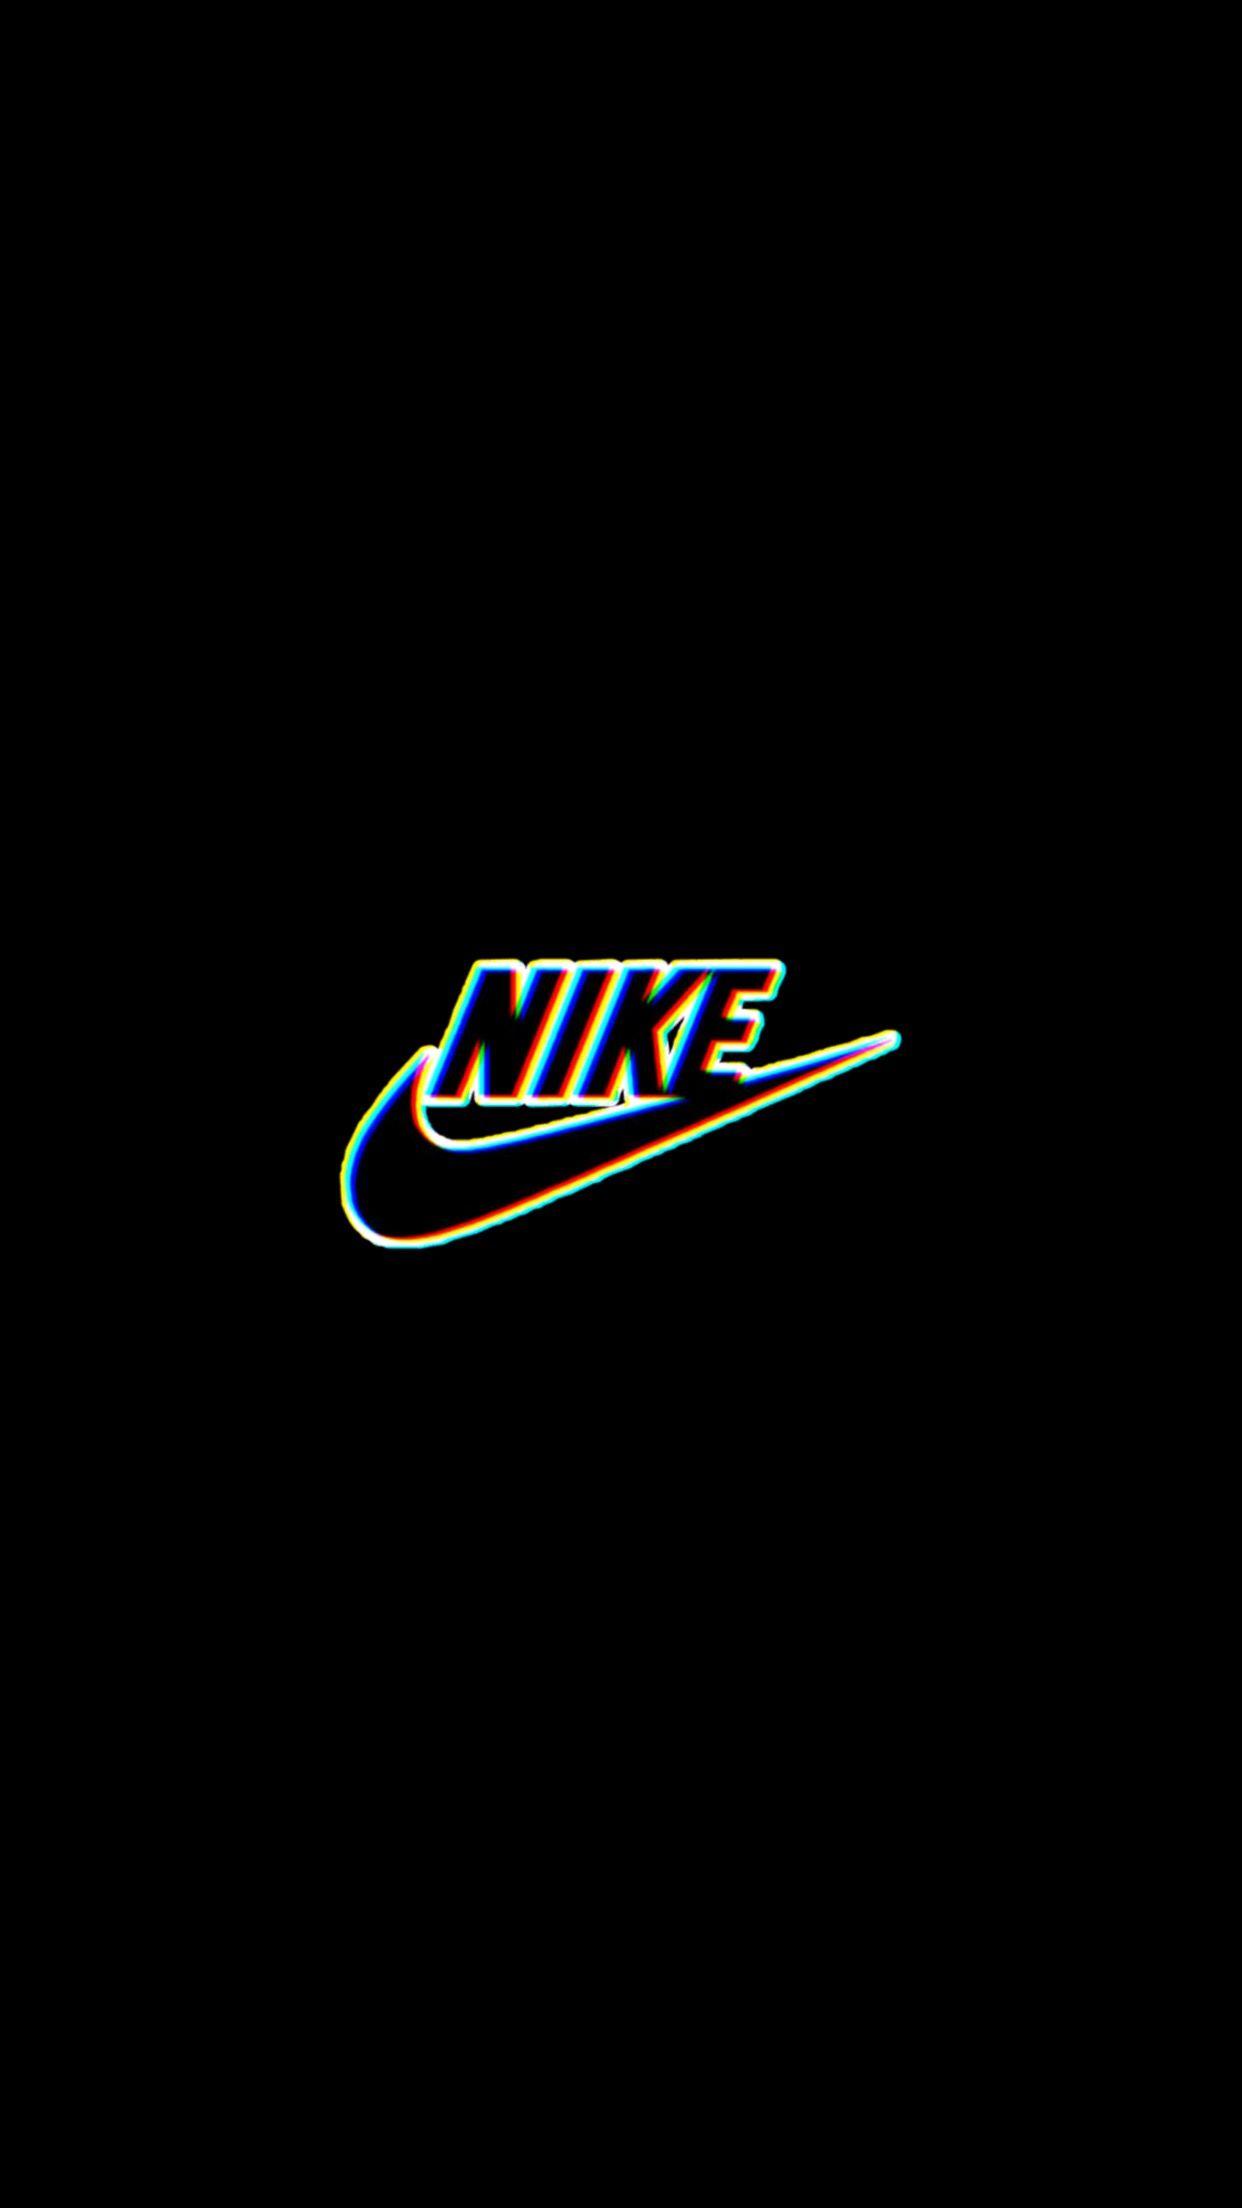 Nike background, aesthetic wallpaper, aesthetic backgrounds